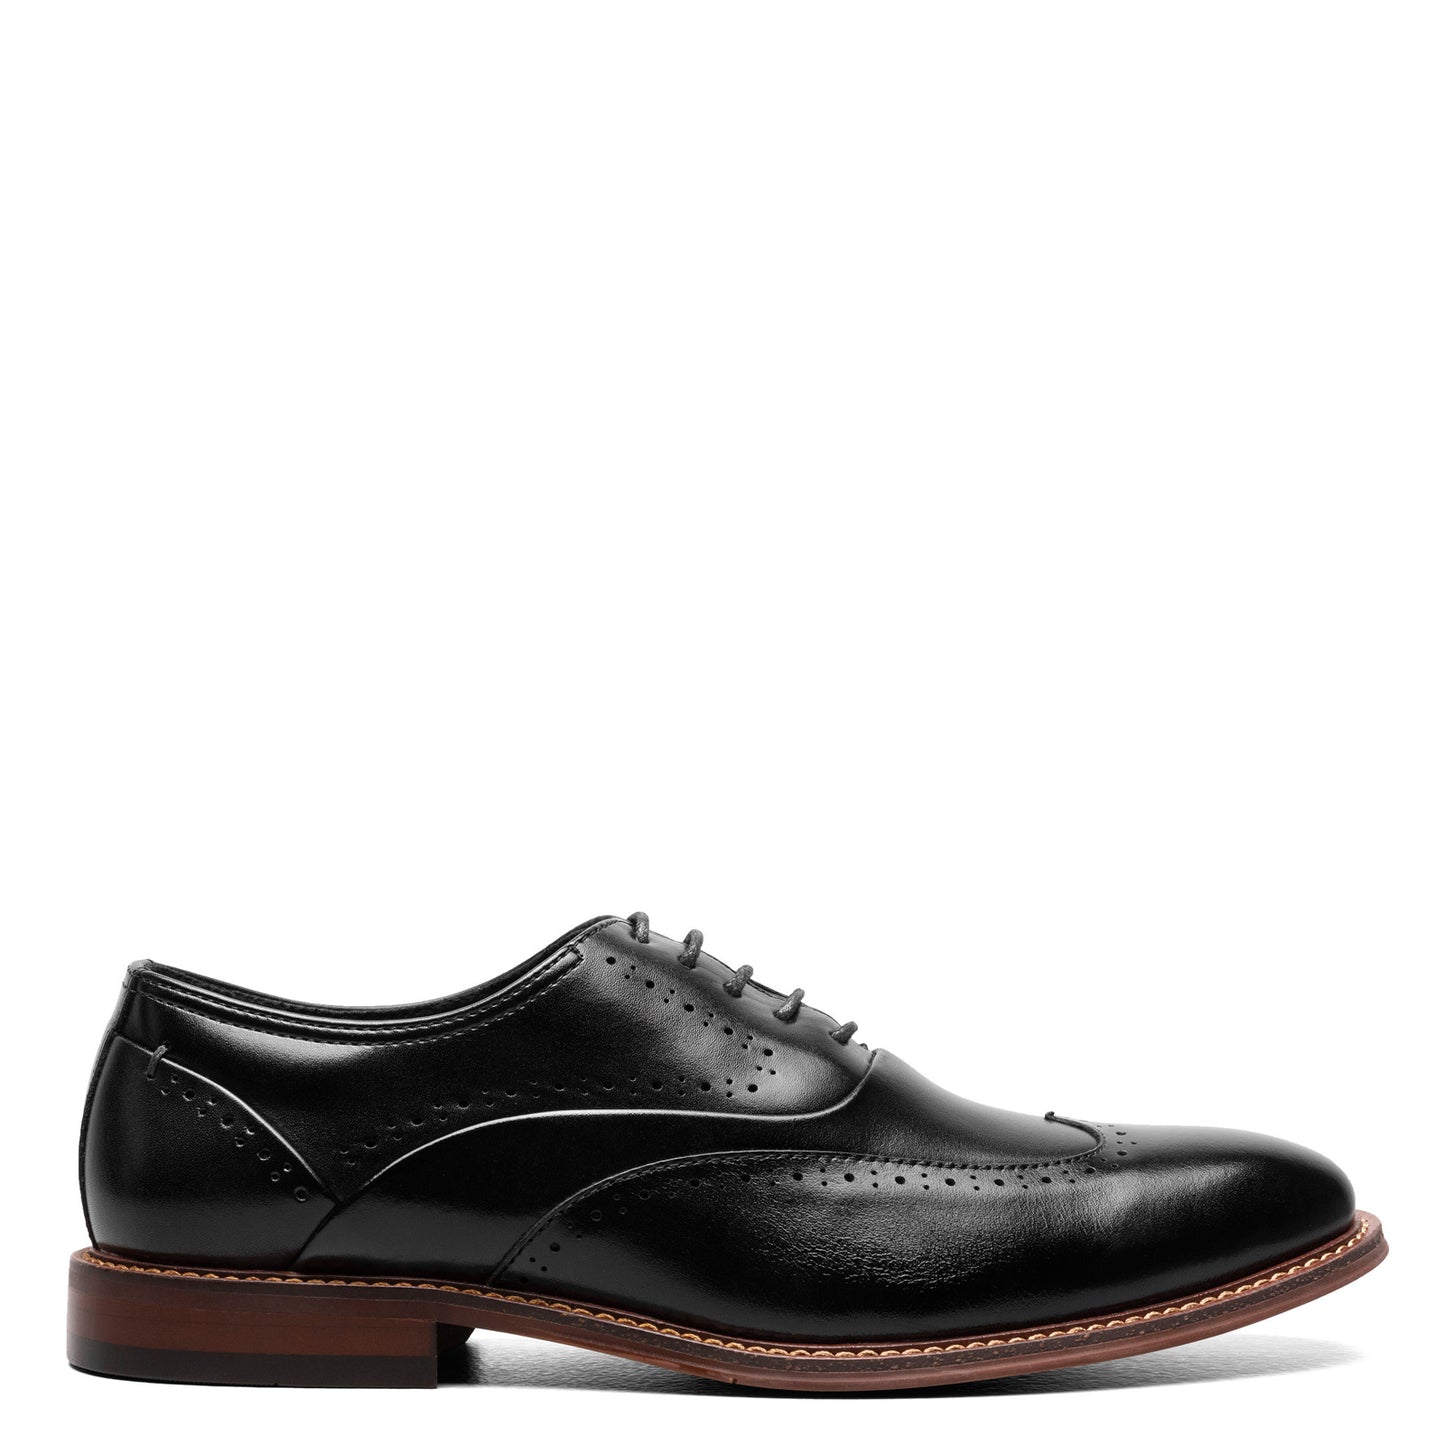 Peltz Shoes  Men's Stacy Adams Macarthur Wingtip Oxford BLACK POLISHED 25489-005